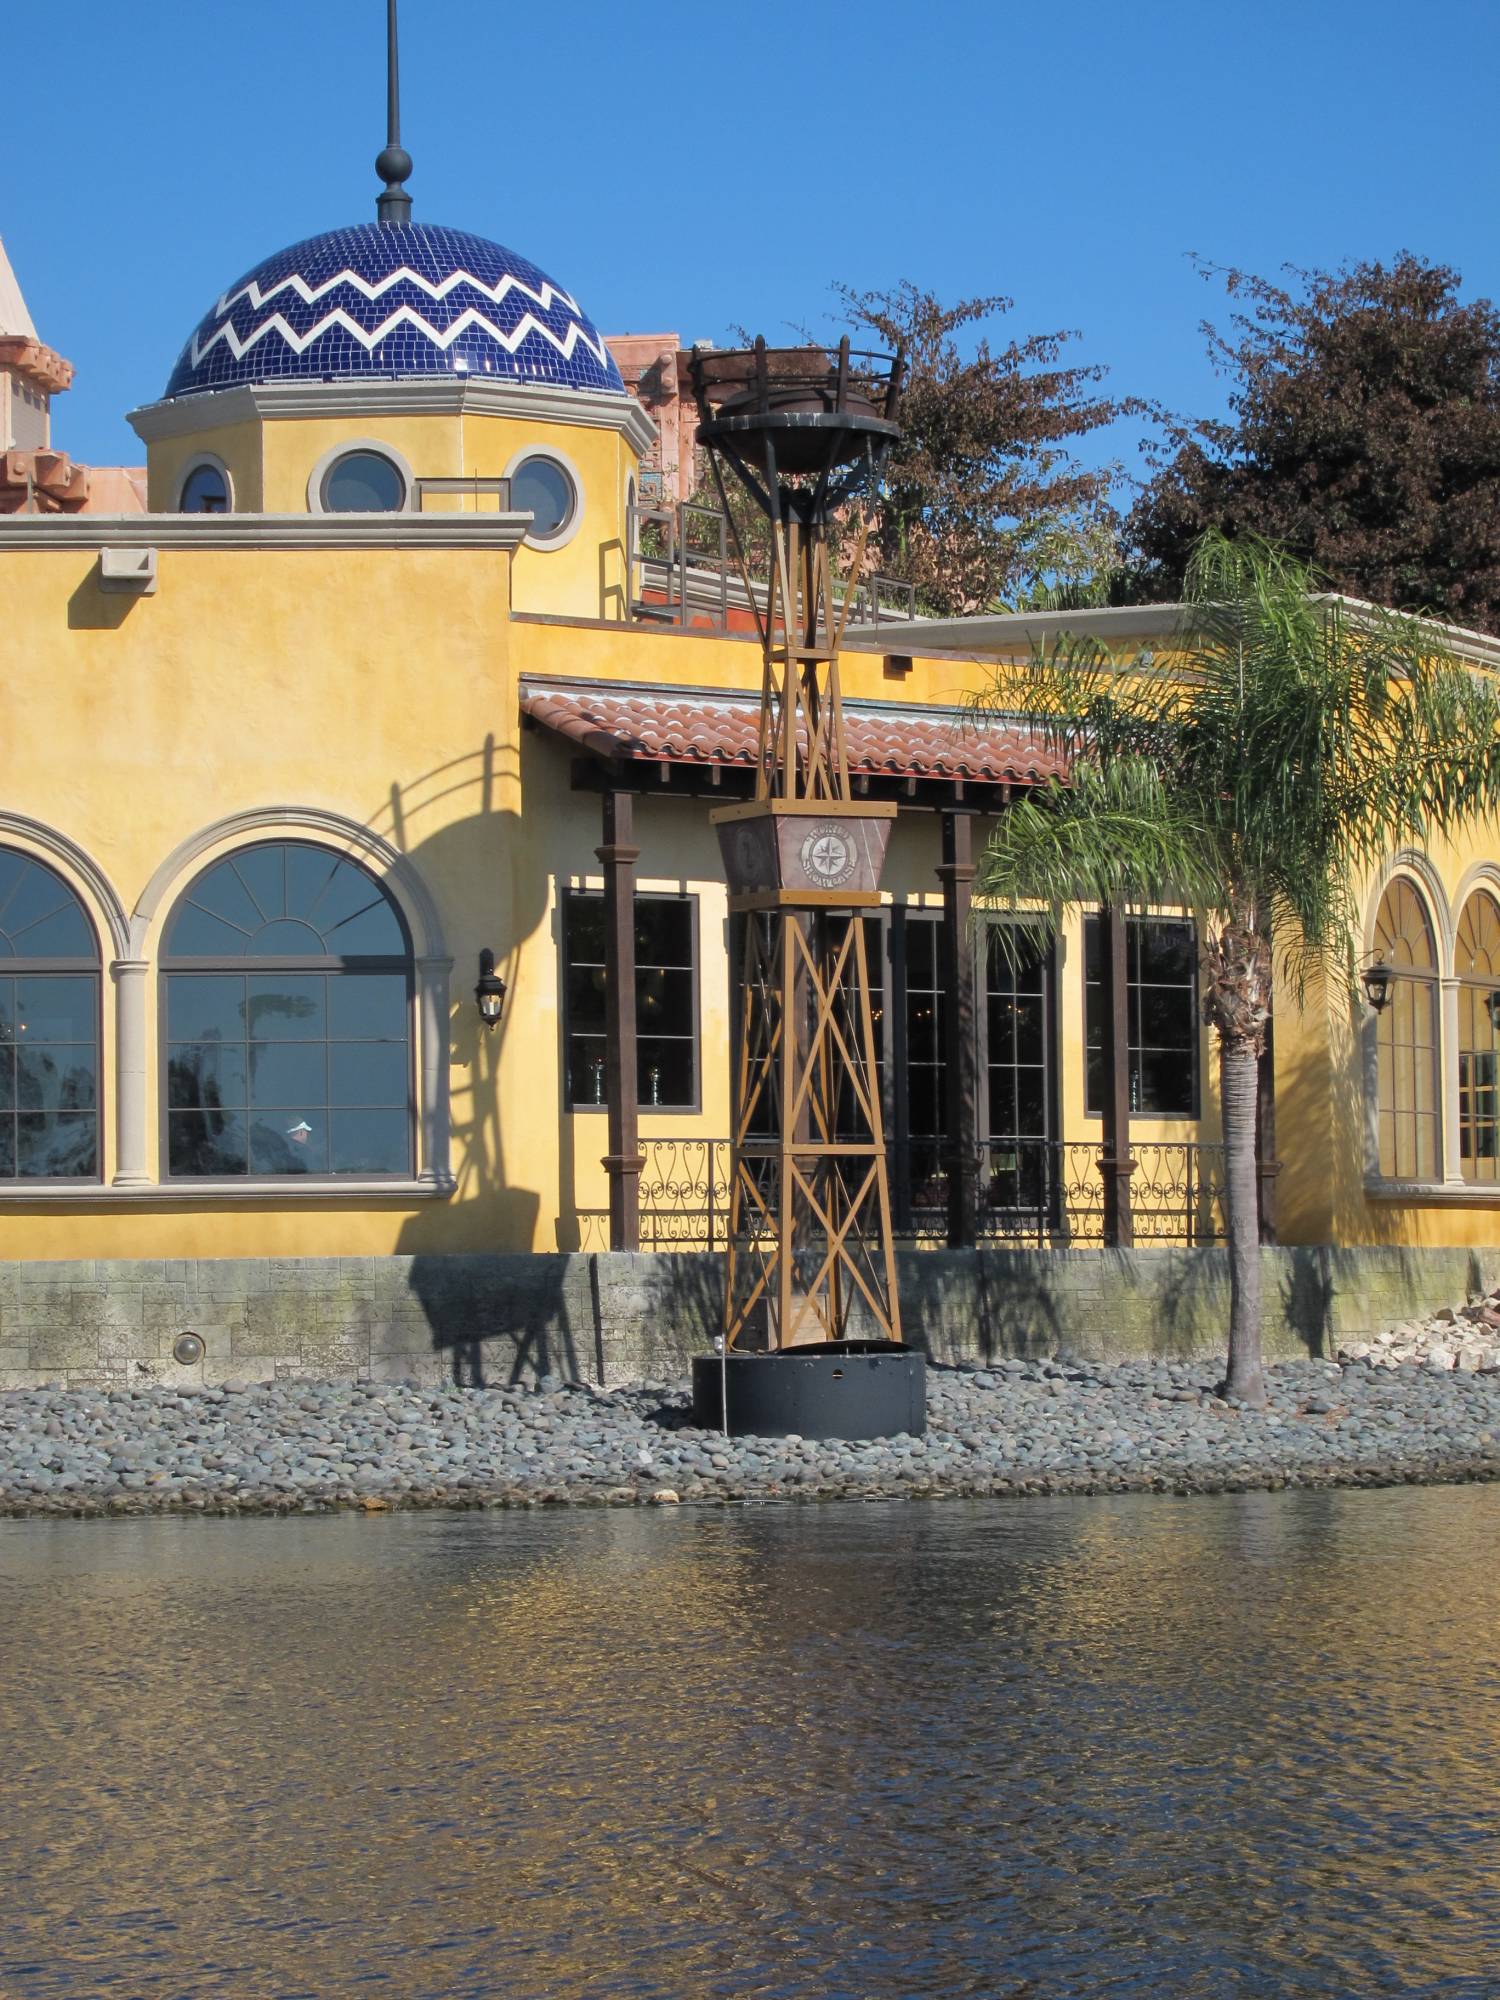 Explore the offerings at La Hacienda de San Angel | PassPorter.com